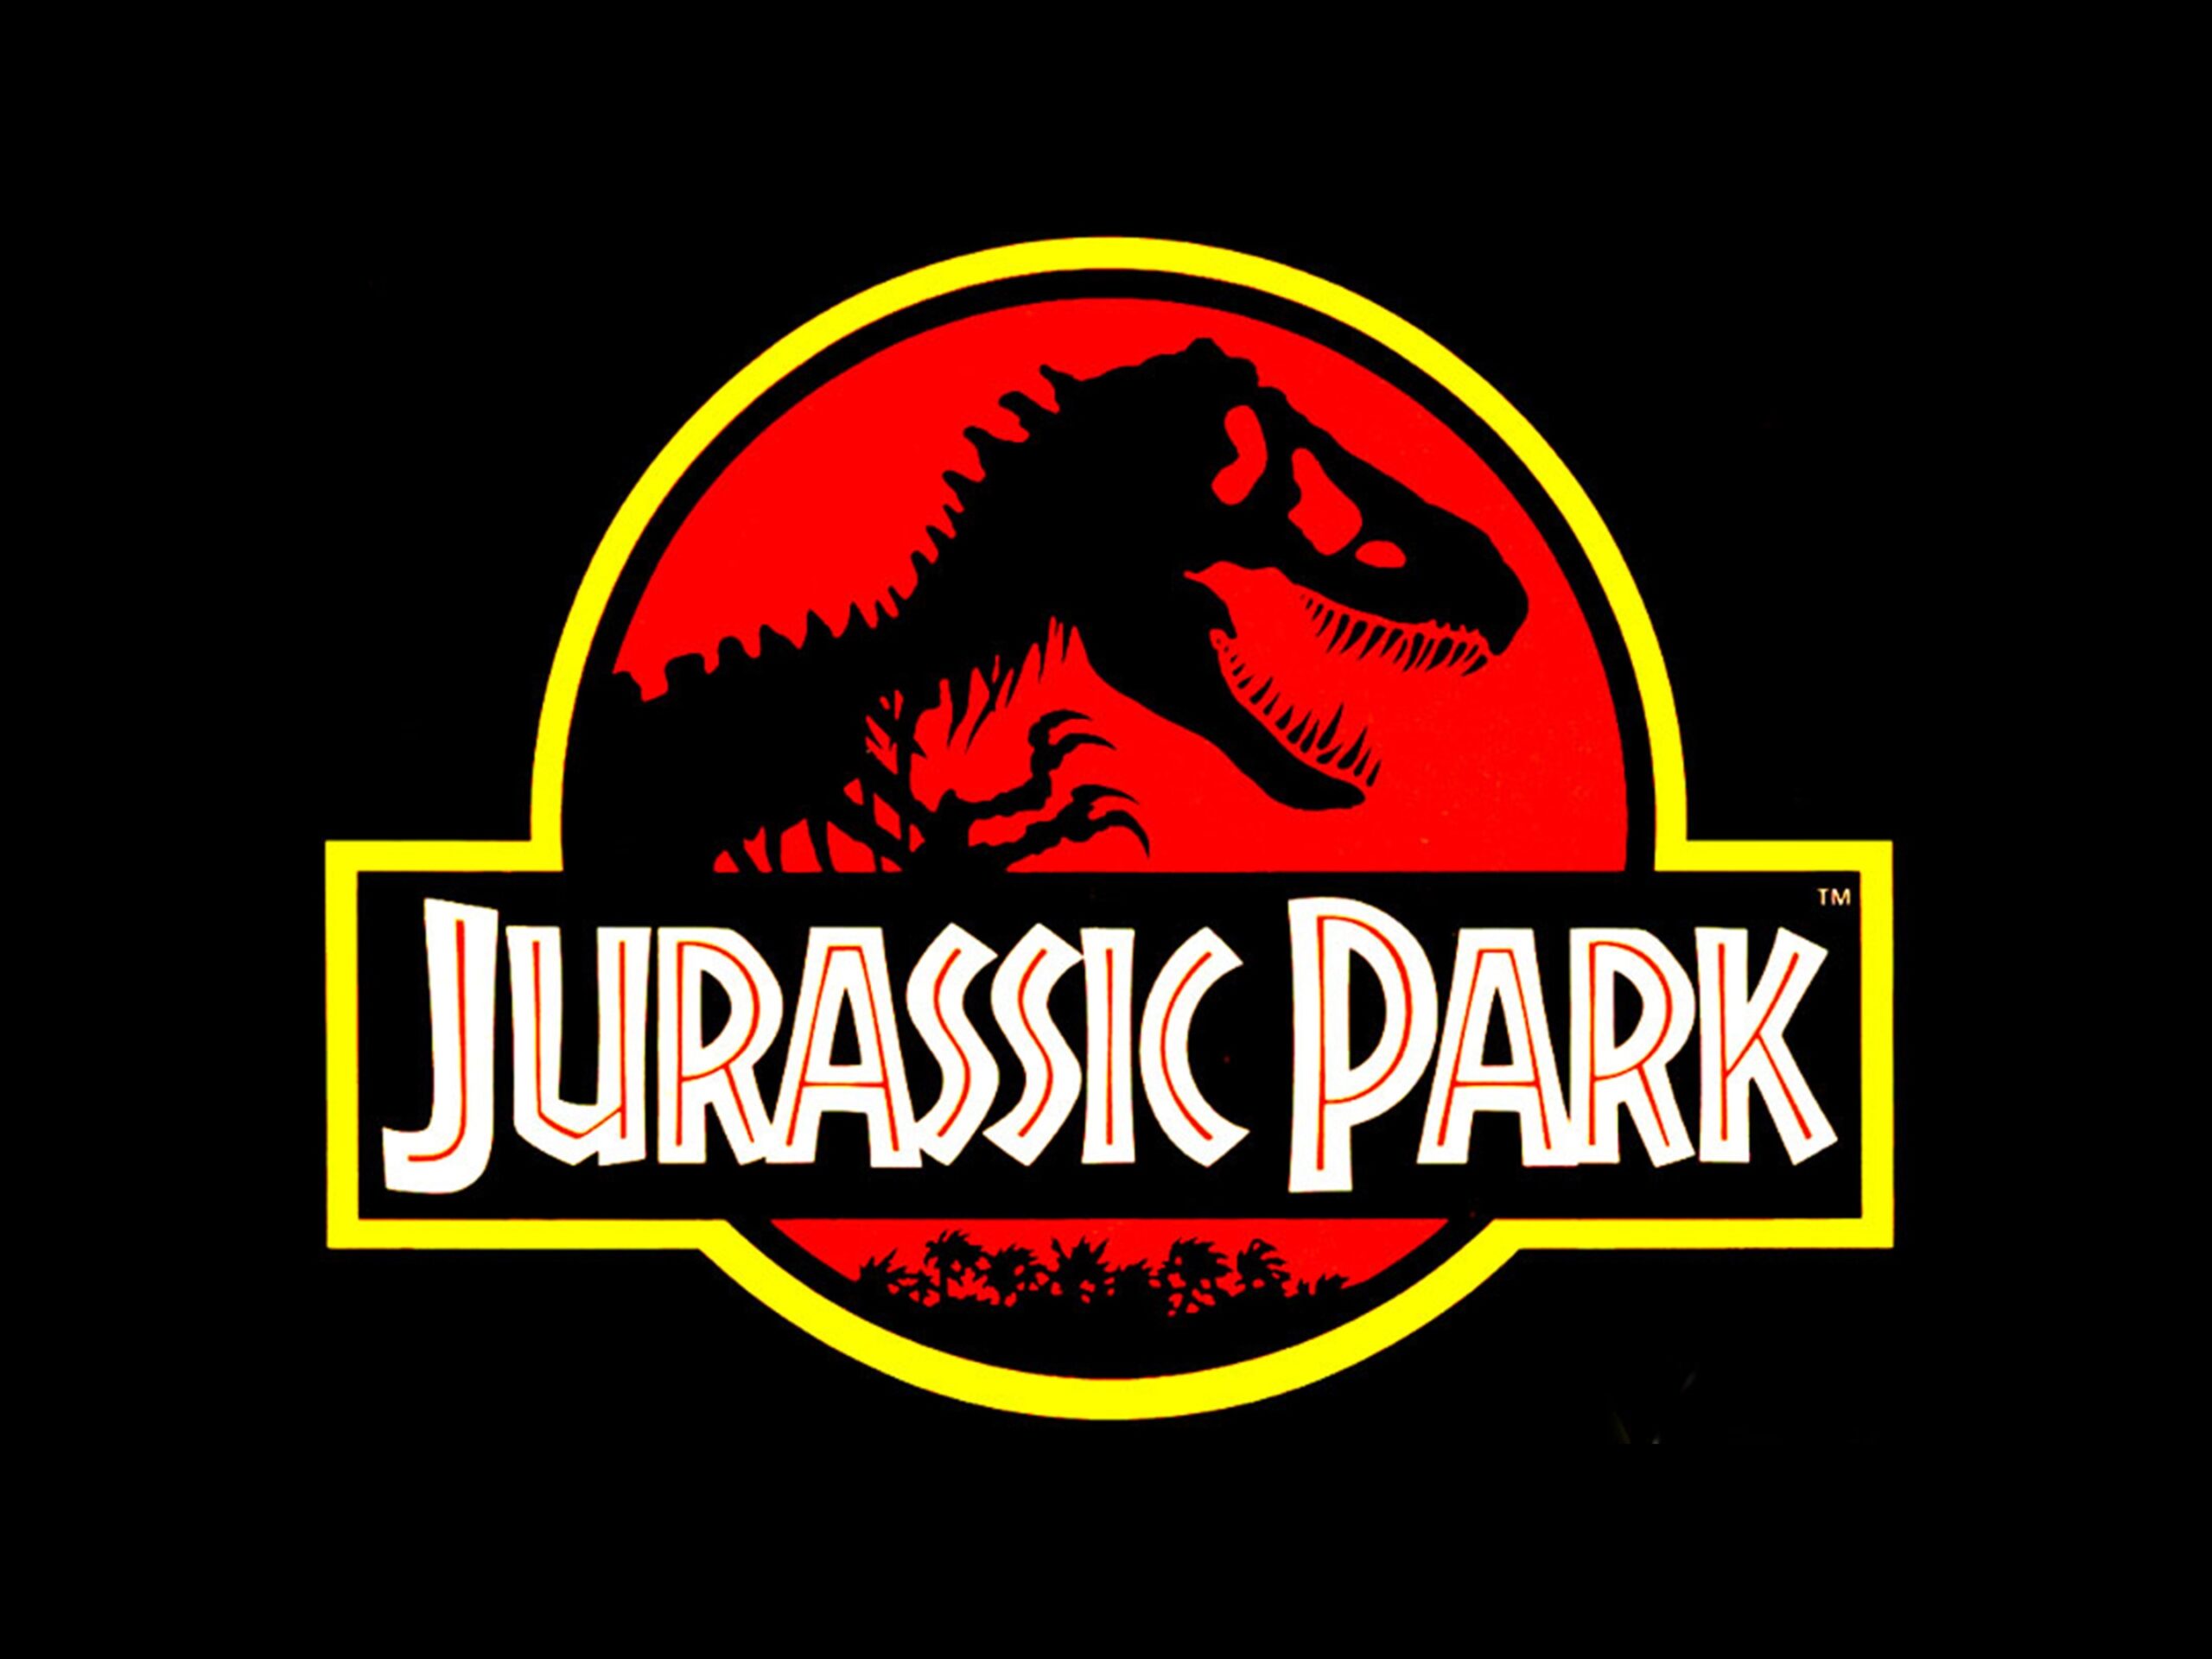 Jurassic Park Retrospective: 30 Years of Dinosaurs!